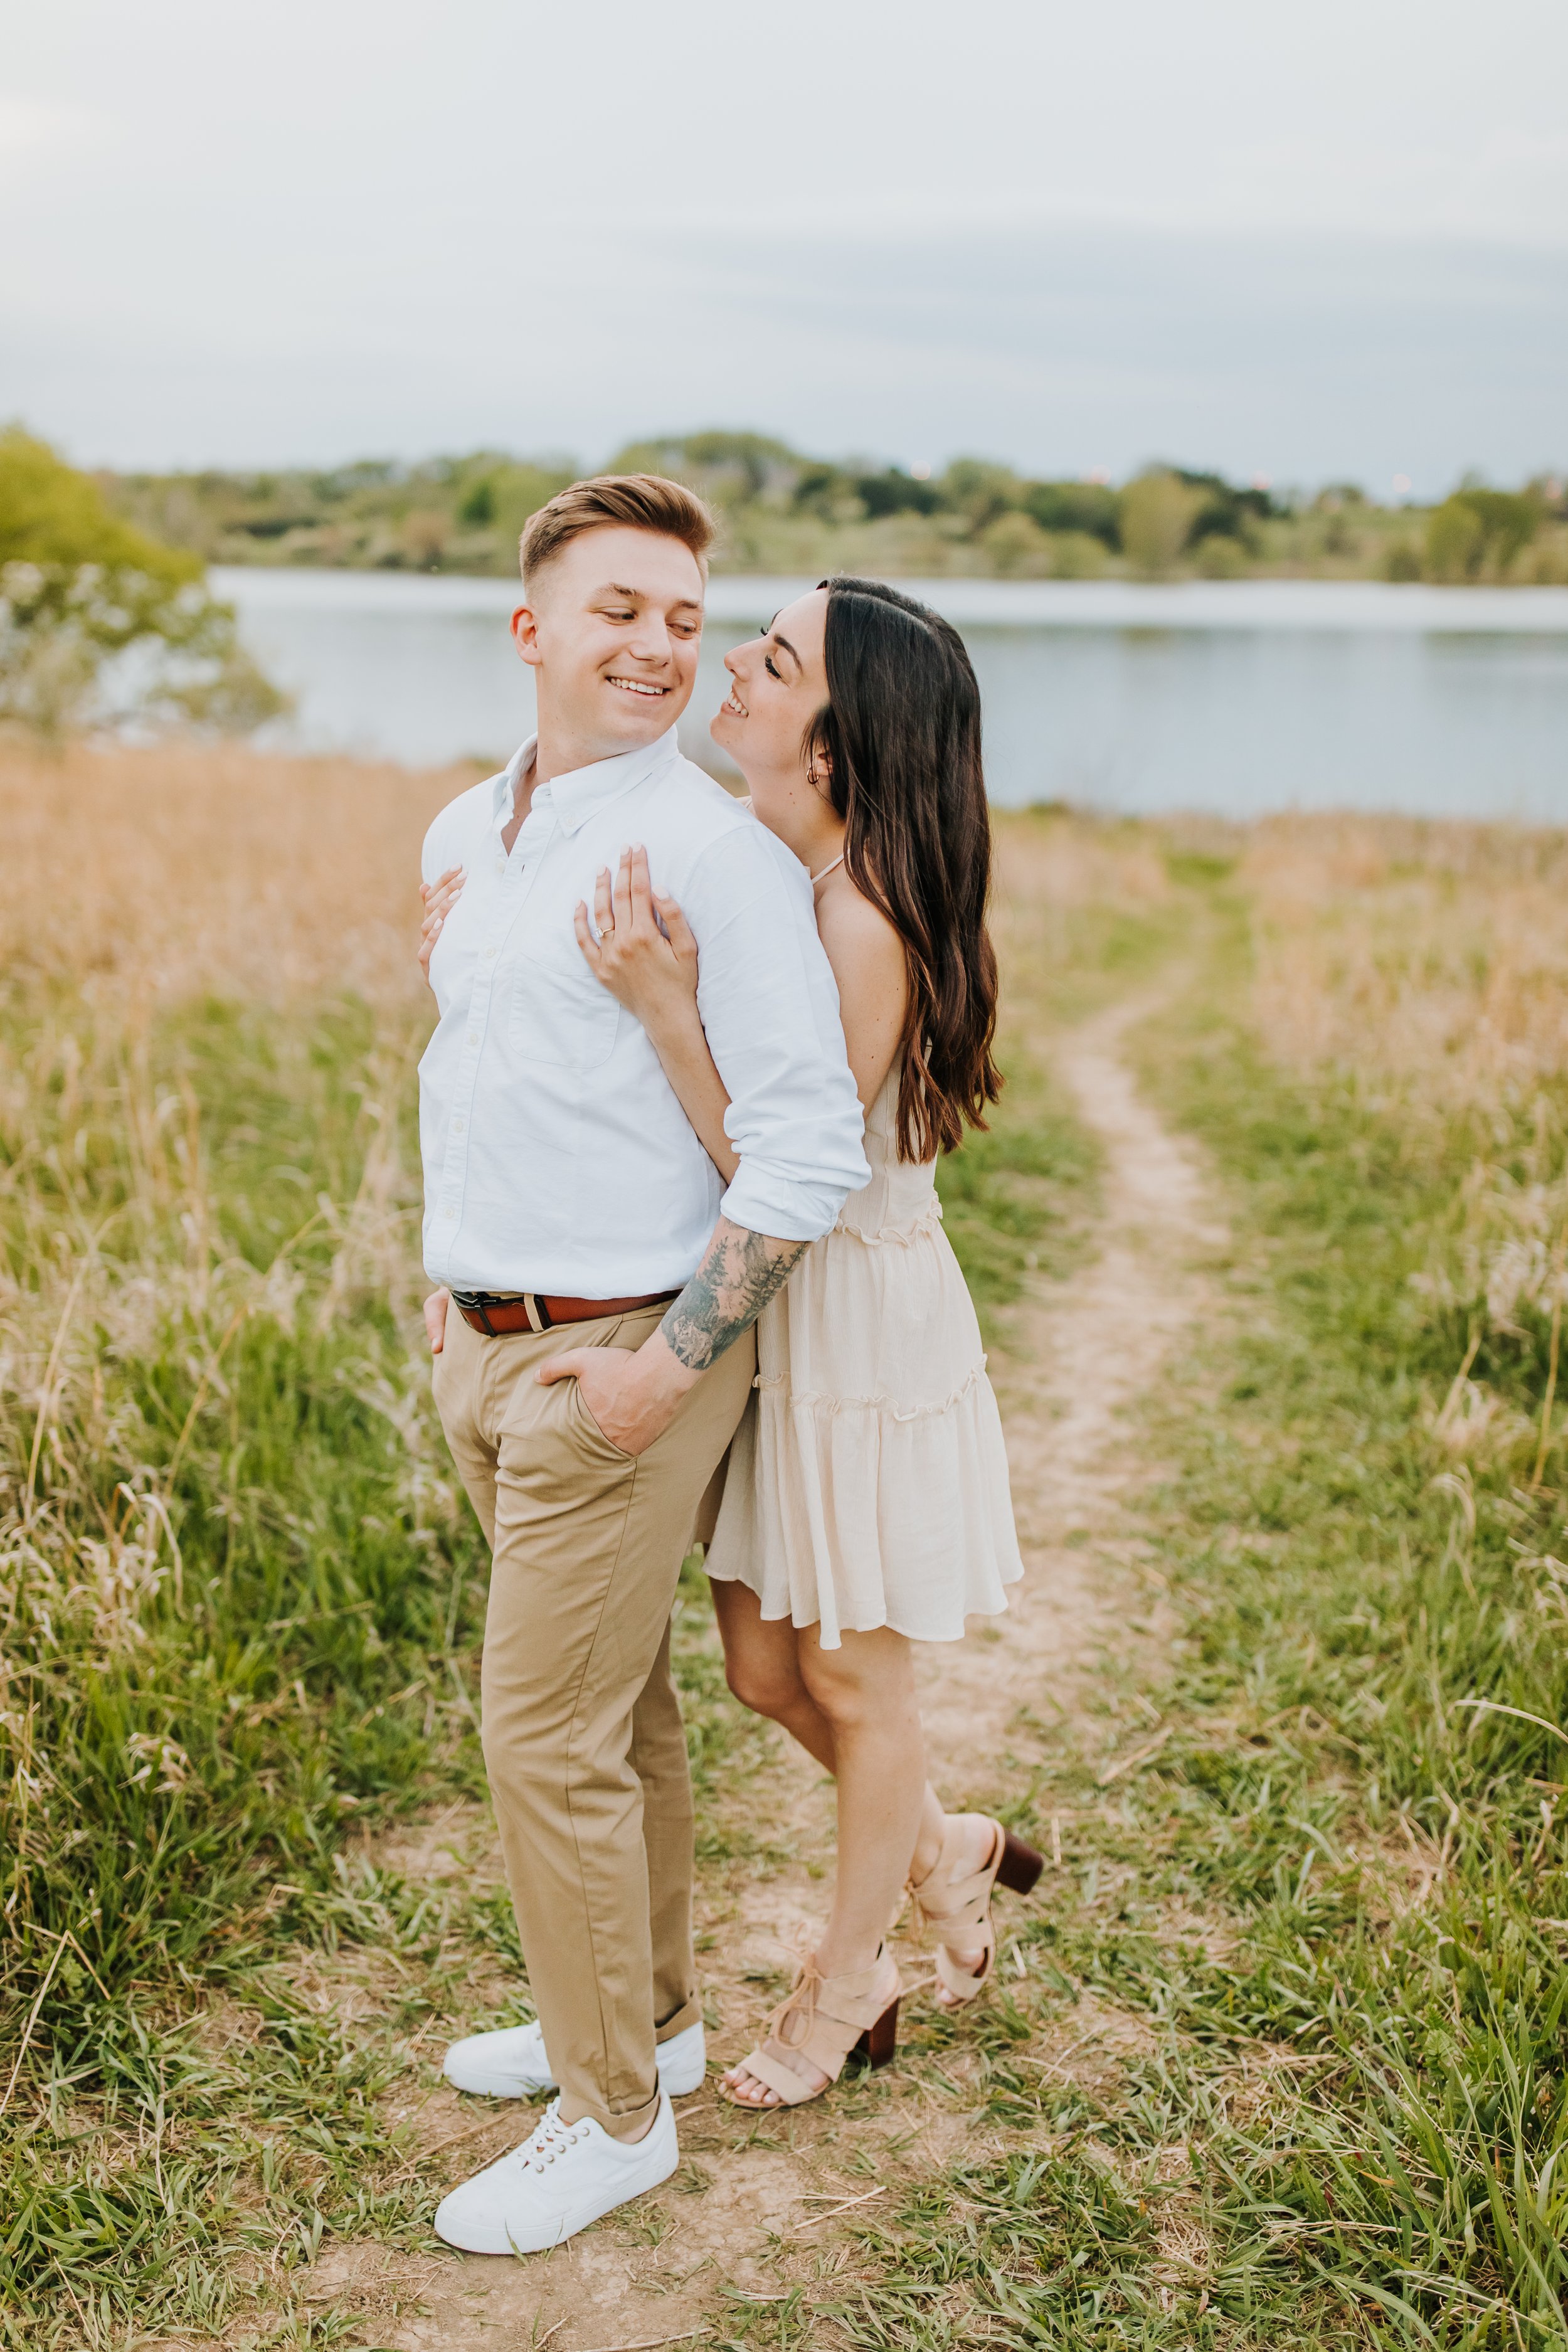 Allison & Liam - Engaged - Nathaniel Jensen Photography - Omaha Nebraska Wedding Photographer-133.jpg